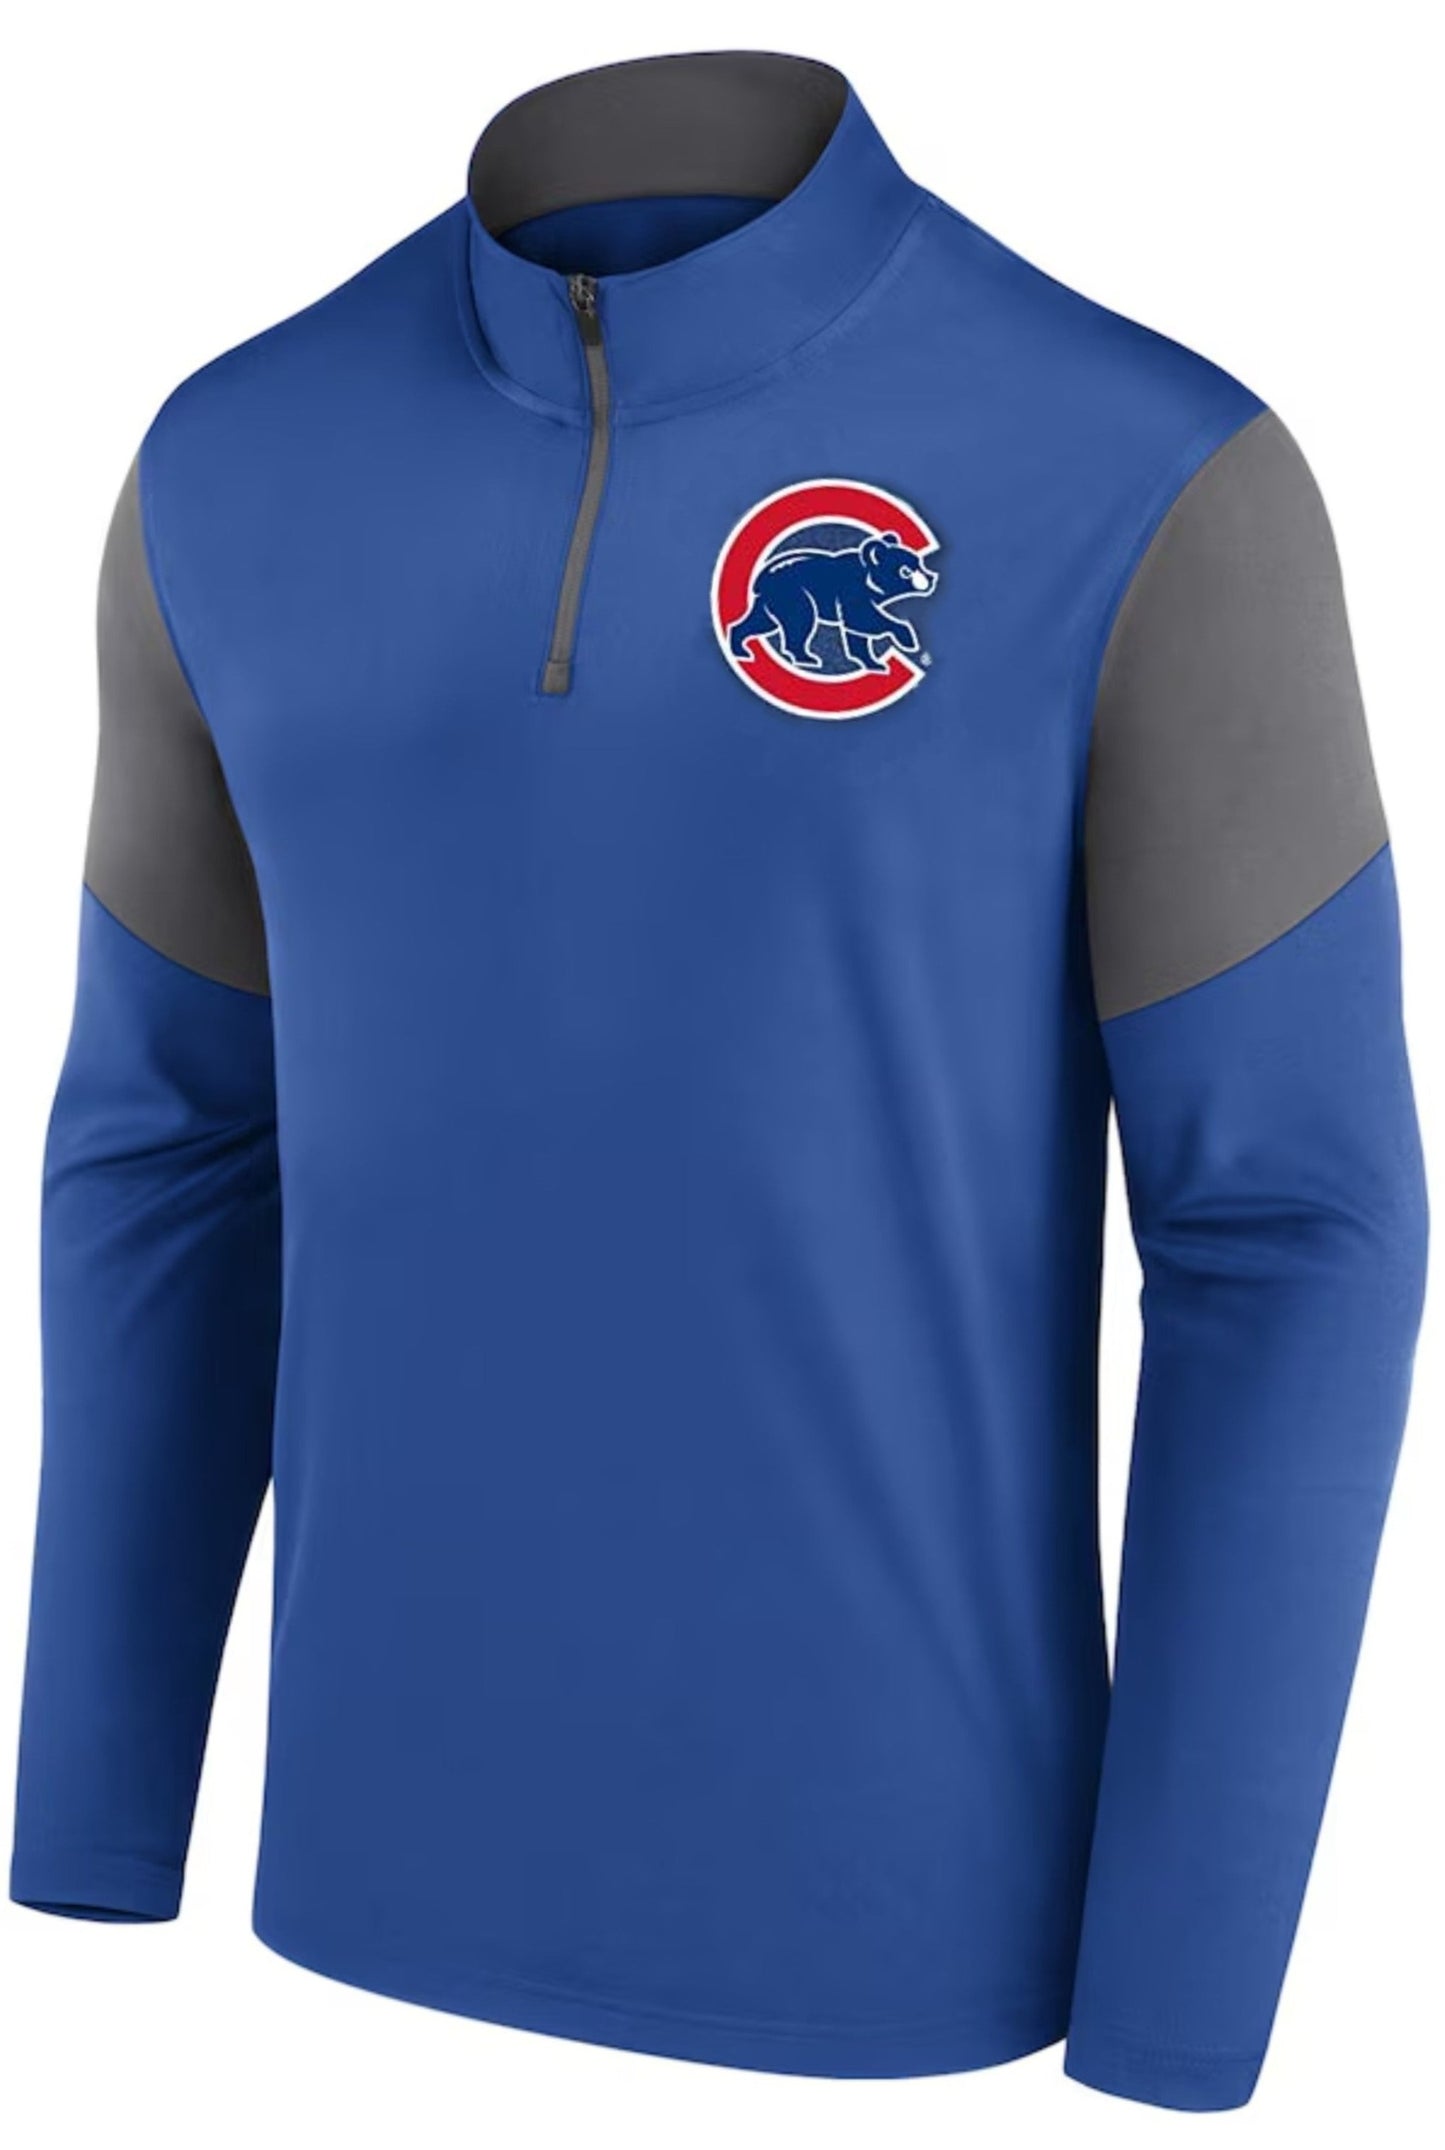 Chicago Cubs - LC Primary Men's 1/4 Zip Shirt